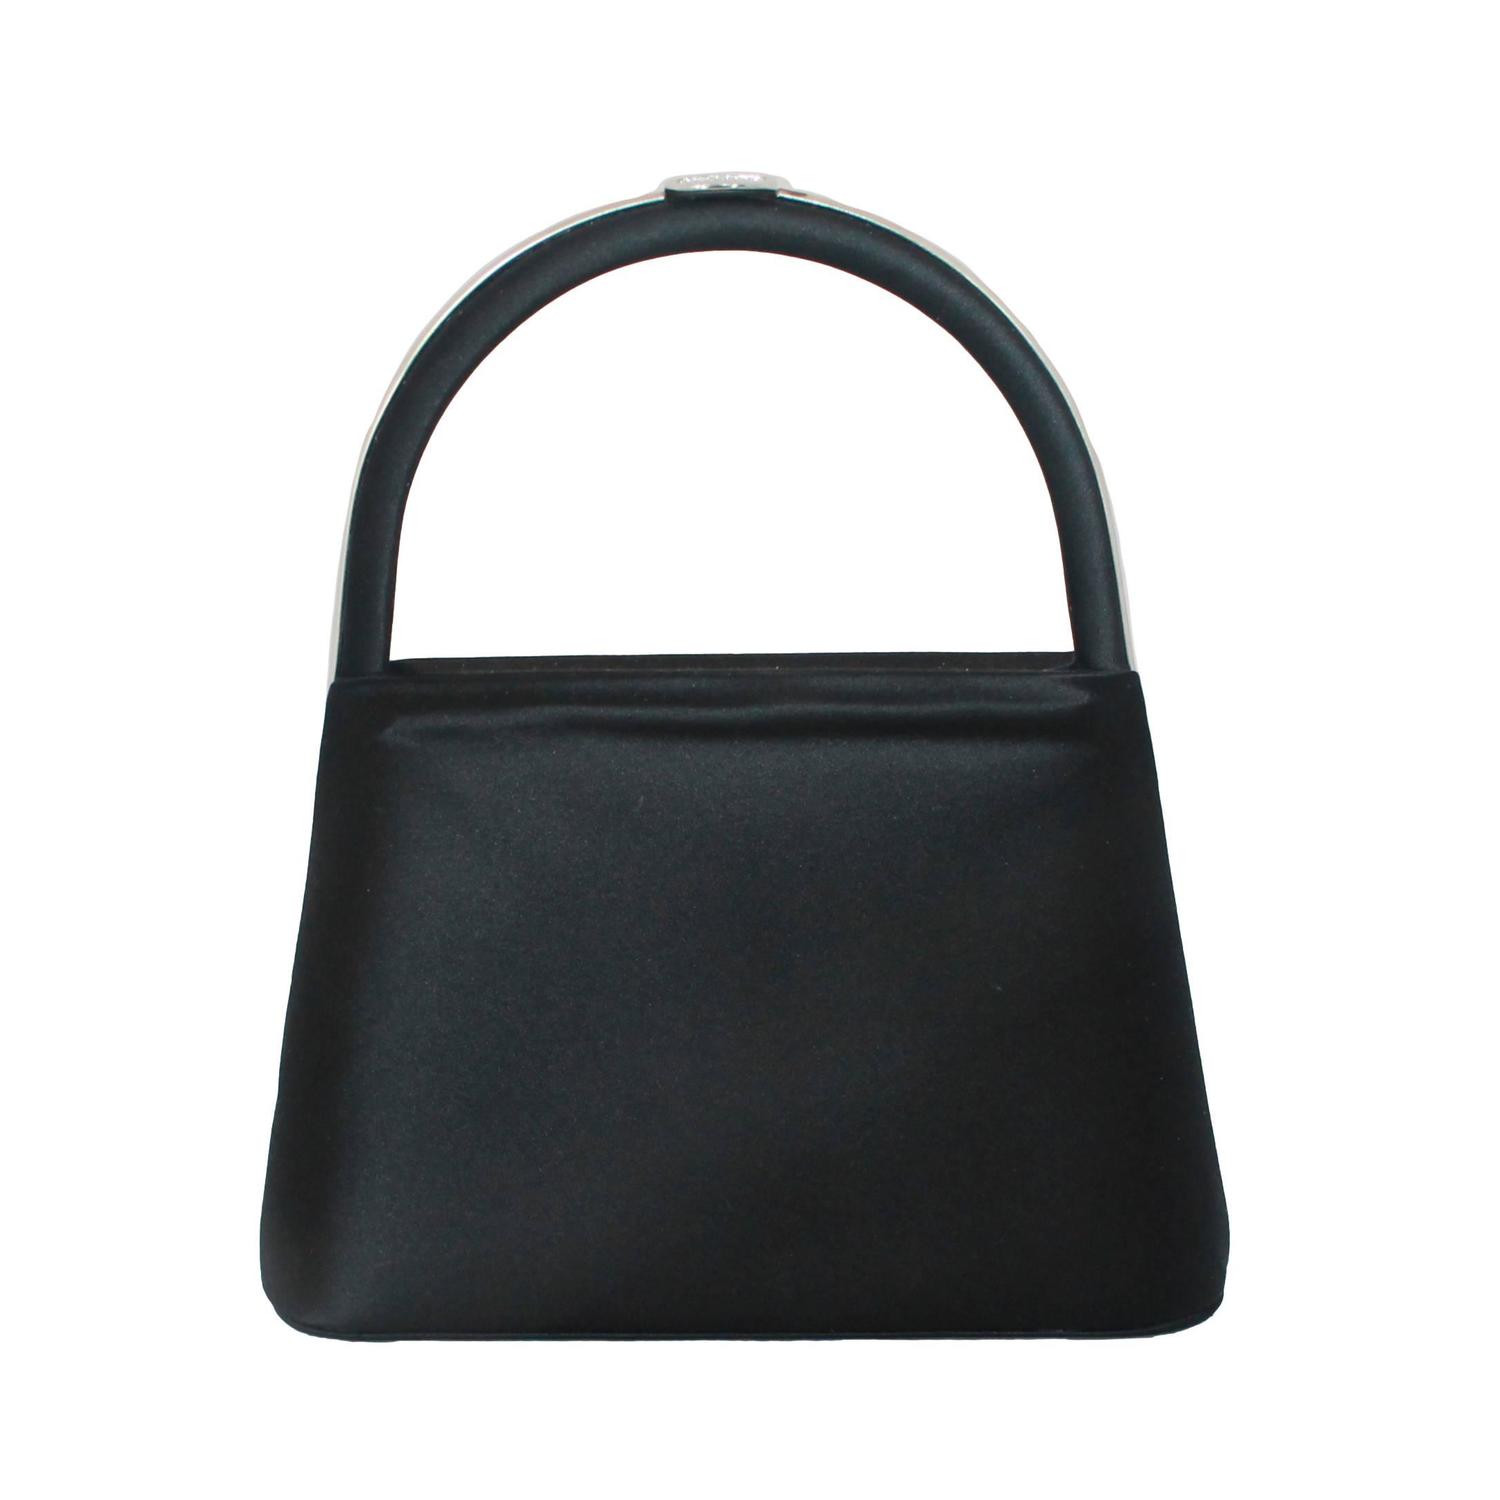 Judith Leiber Black Satin Top Handle Evening Bag For Sale at 1stdibs